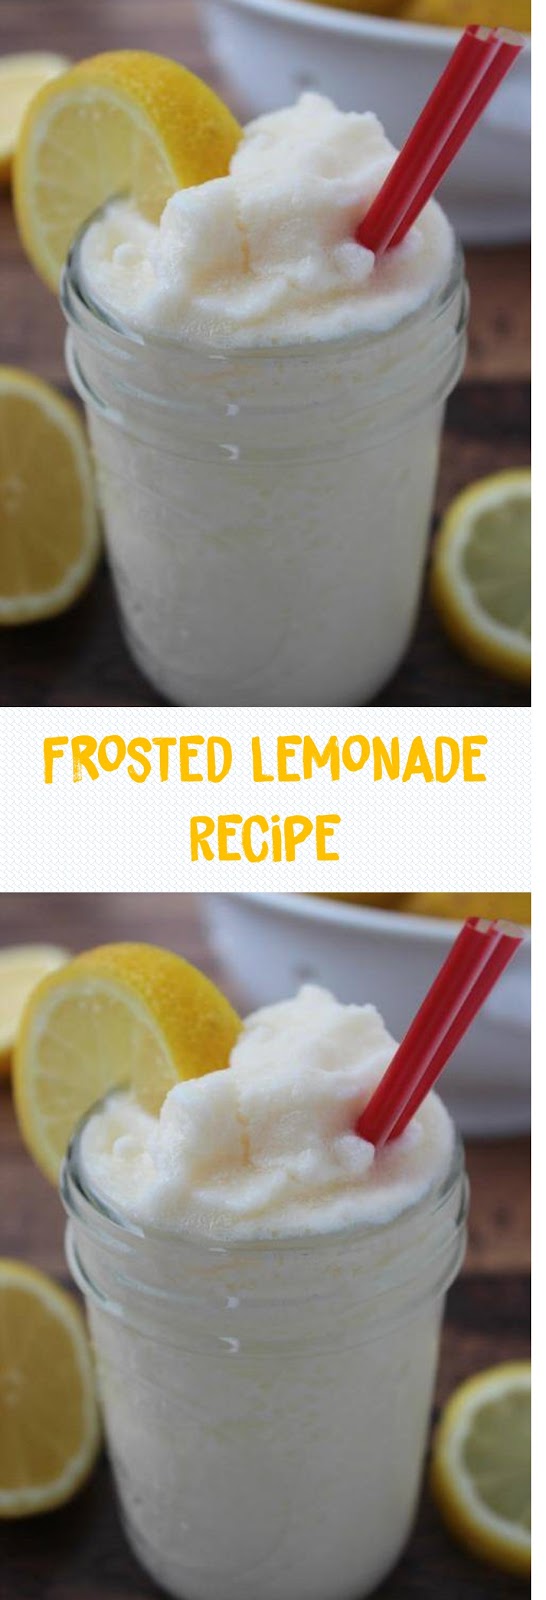 Frosted Lemonade Recipe